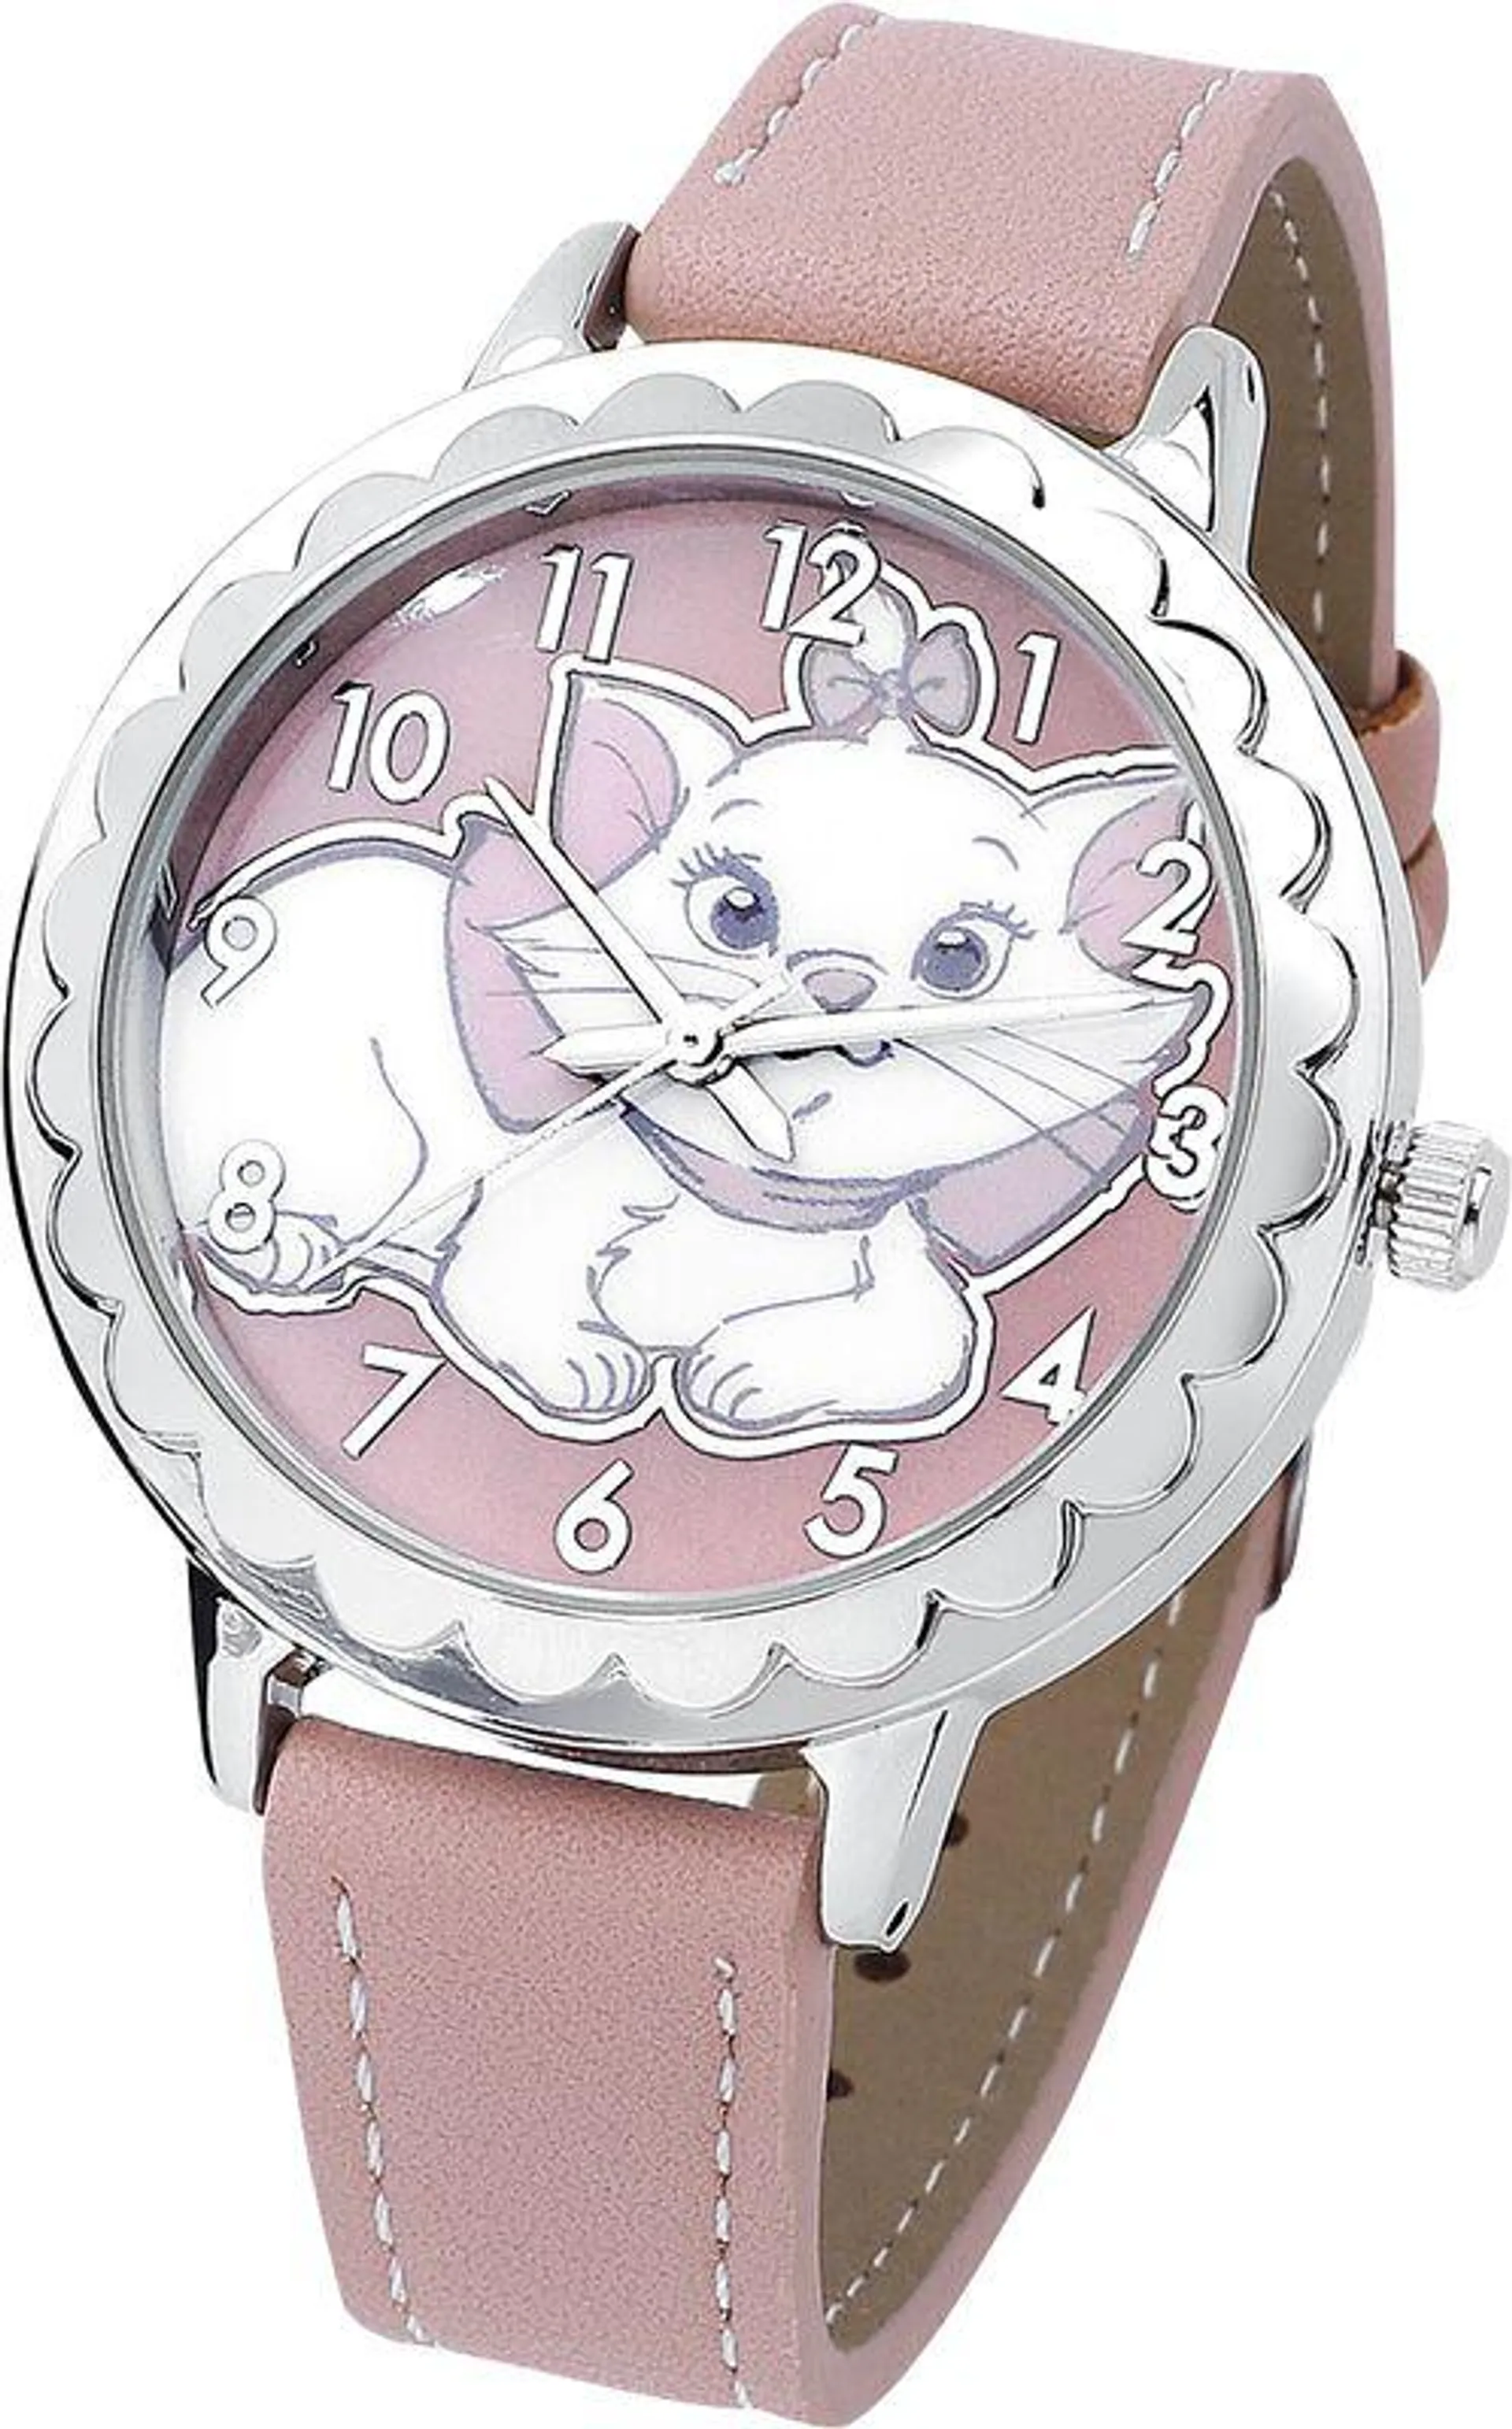 "Marie" Armbanduhren rosa von Aristocats